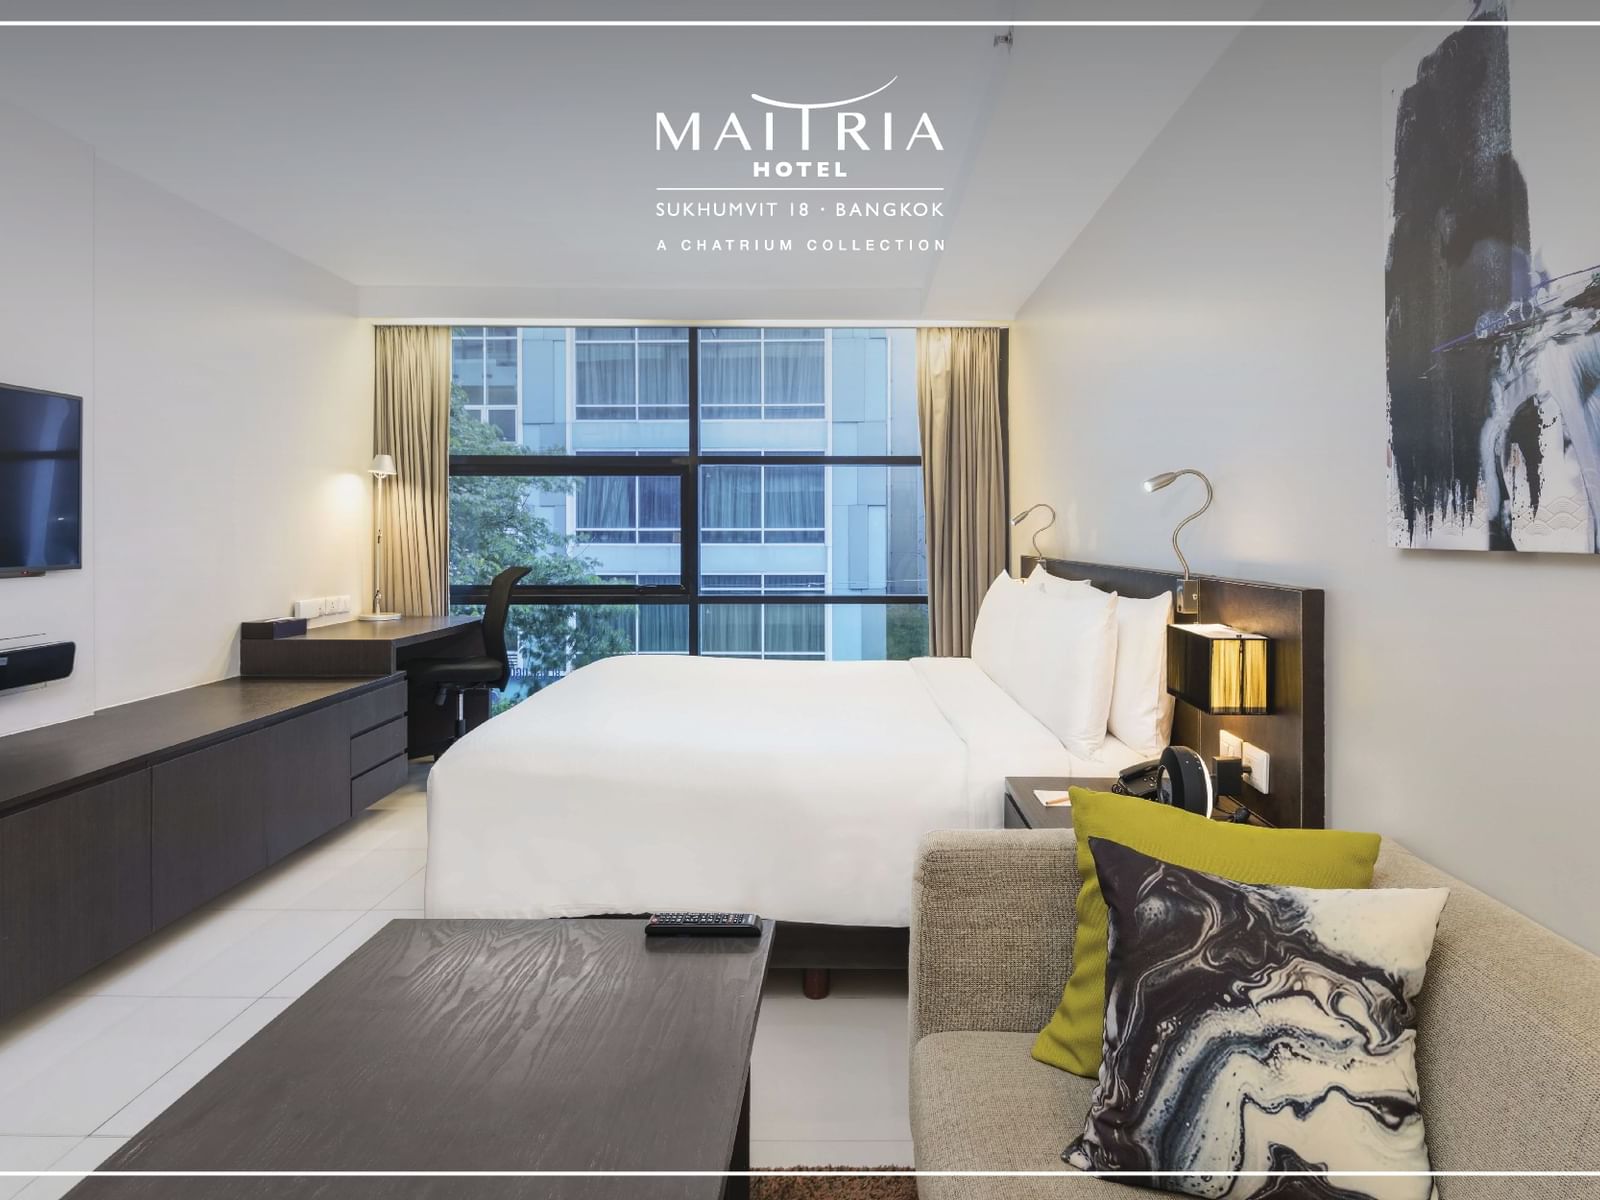 Large bed & sofa in a room at Maitria Hotel Sukhumvit 18